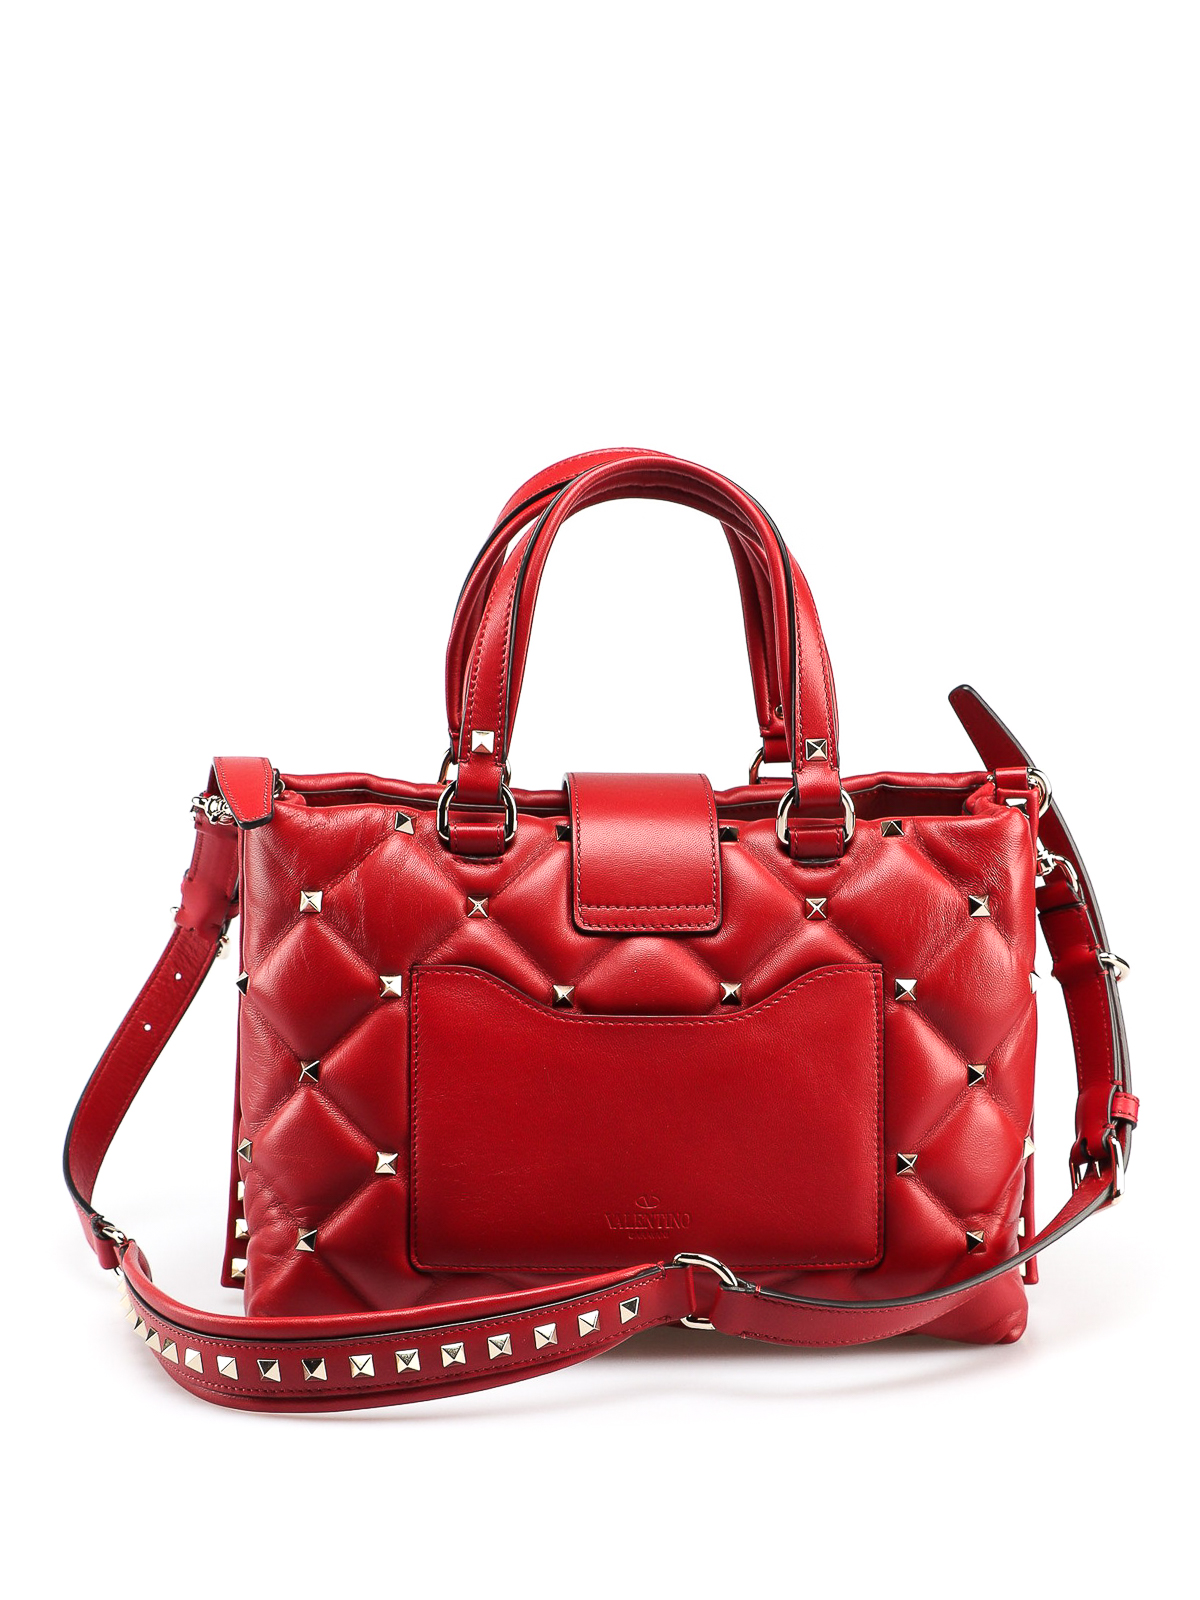 Shoulder bags Valentino Garavani - Candystud red quilted lambskin